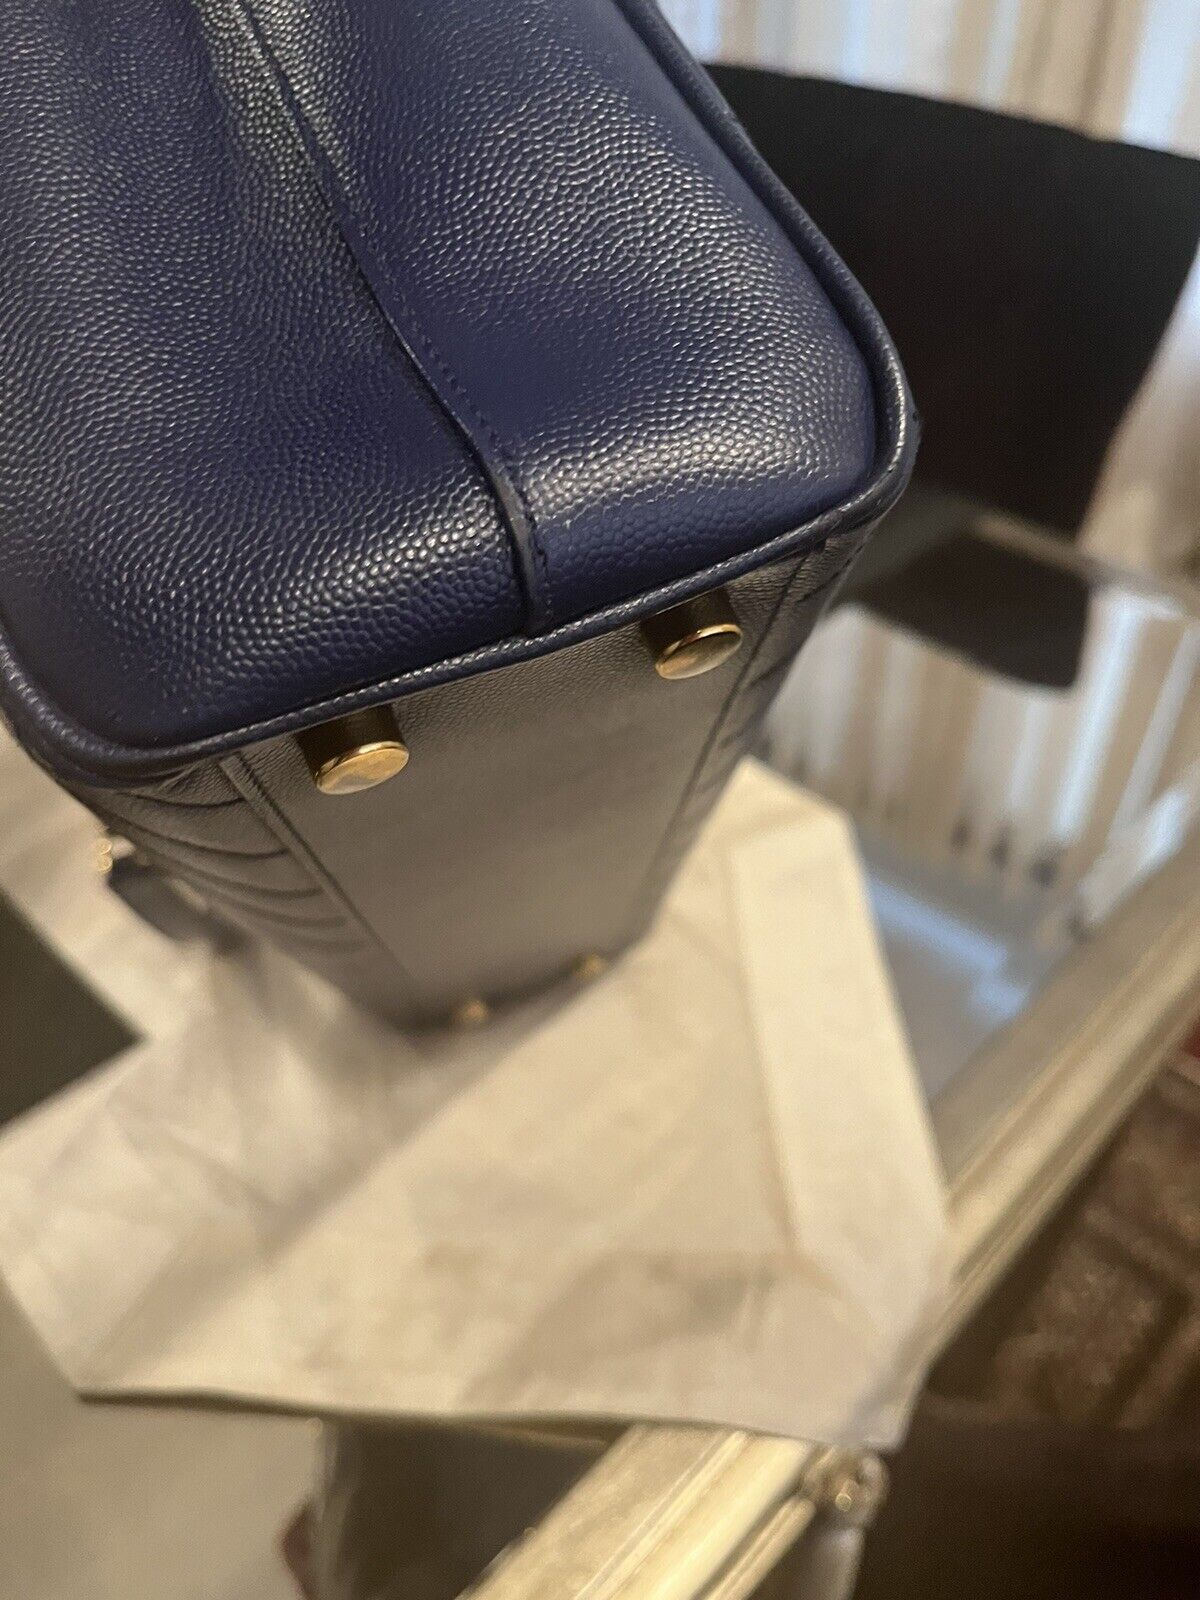 Yves Saint Laurent Handbag (Authentic ) - image 7